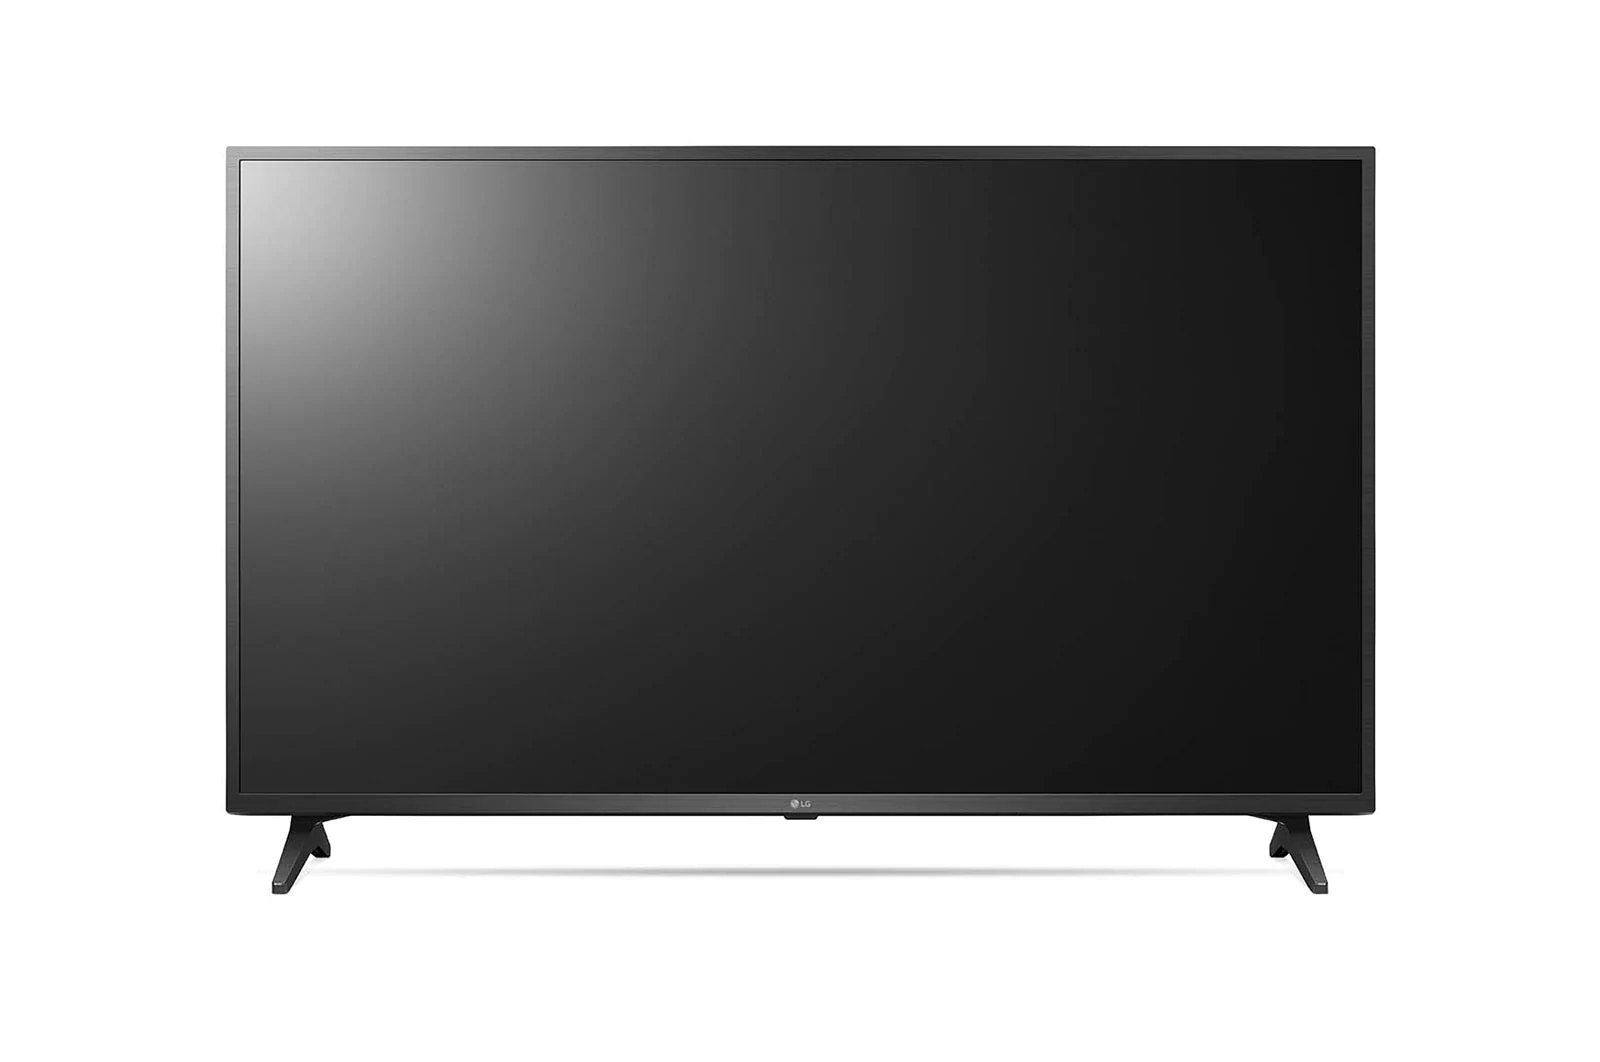 Televisor LG 55 pulgadas Smart TV 4K UHD LED HDMI USB WIFI